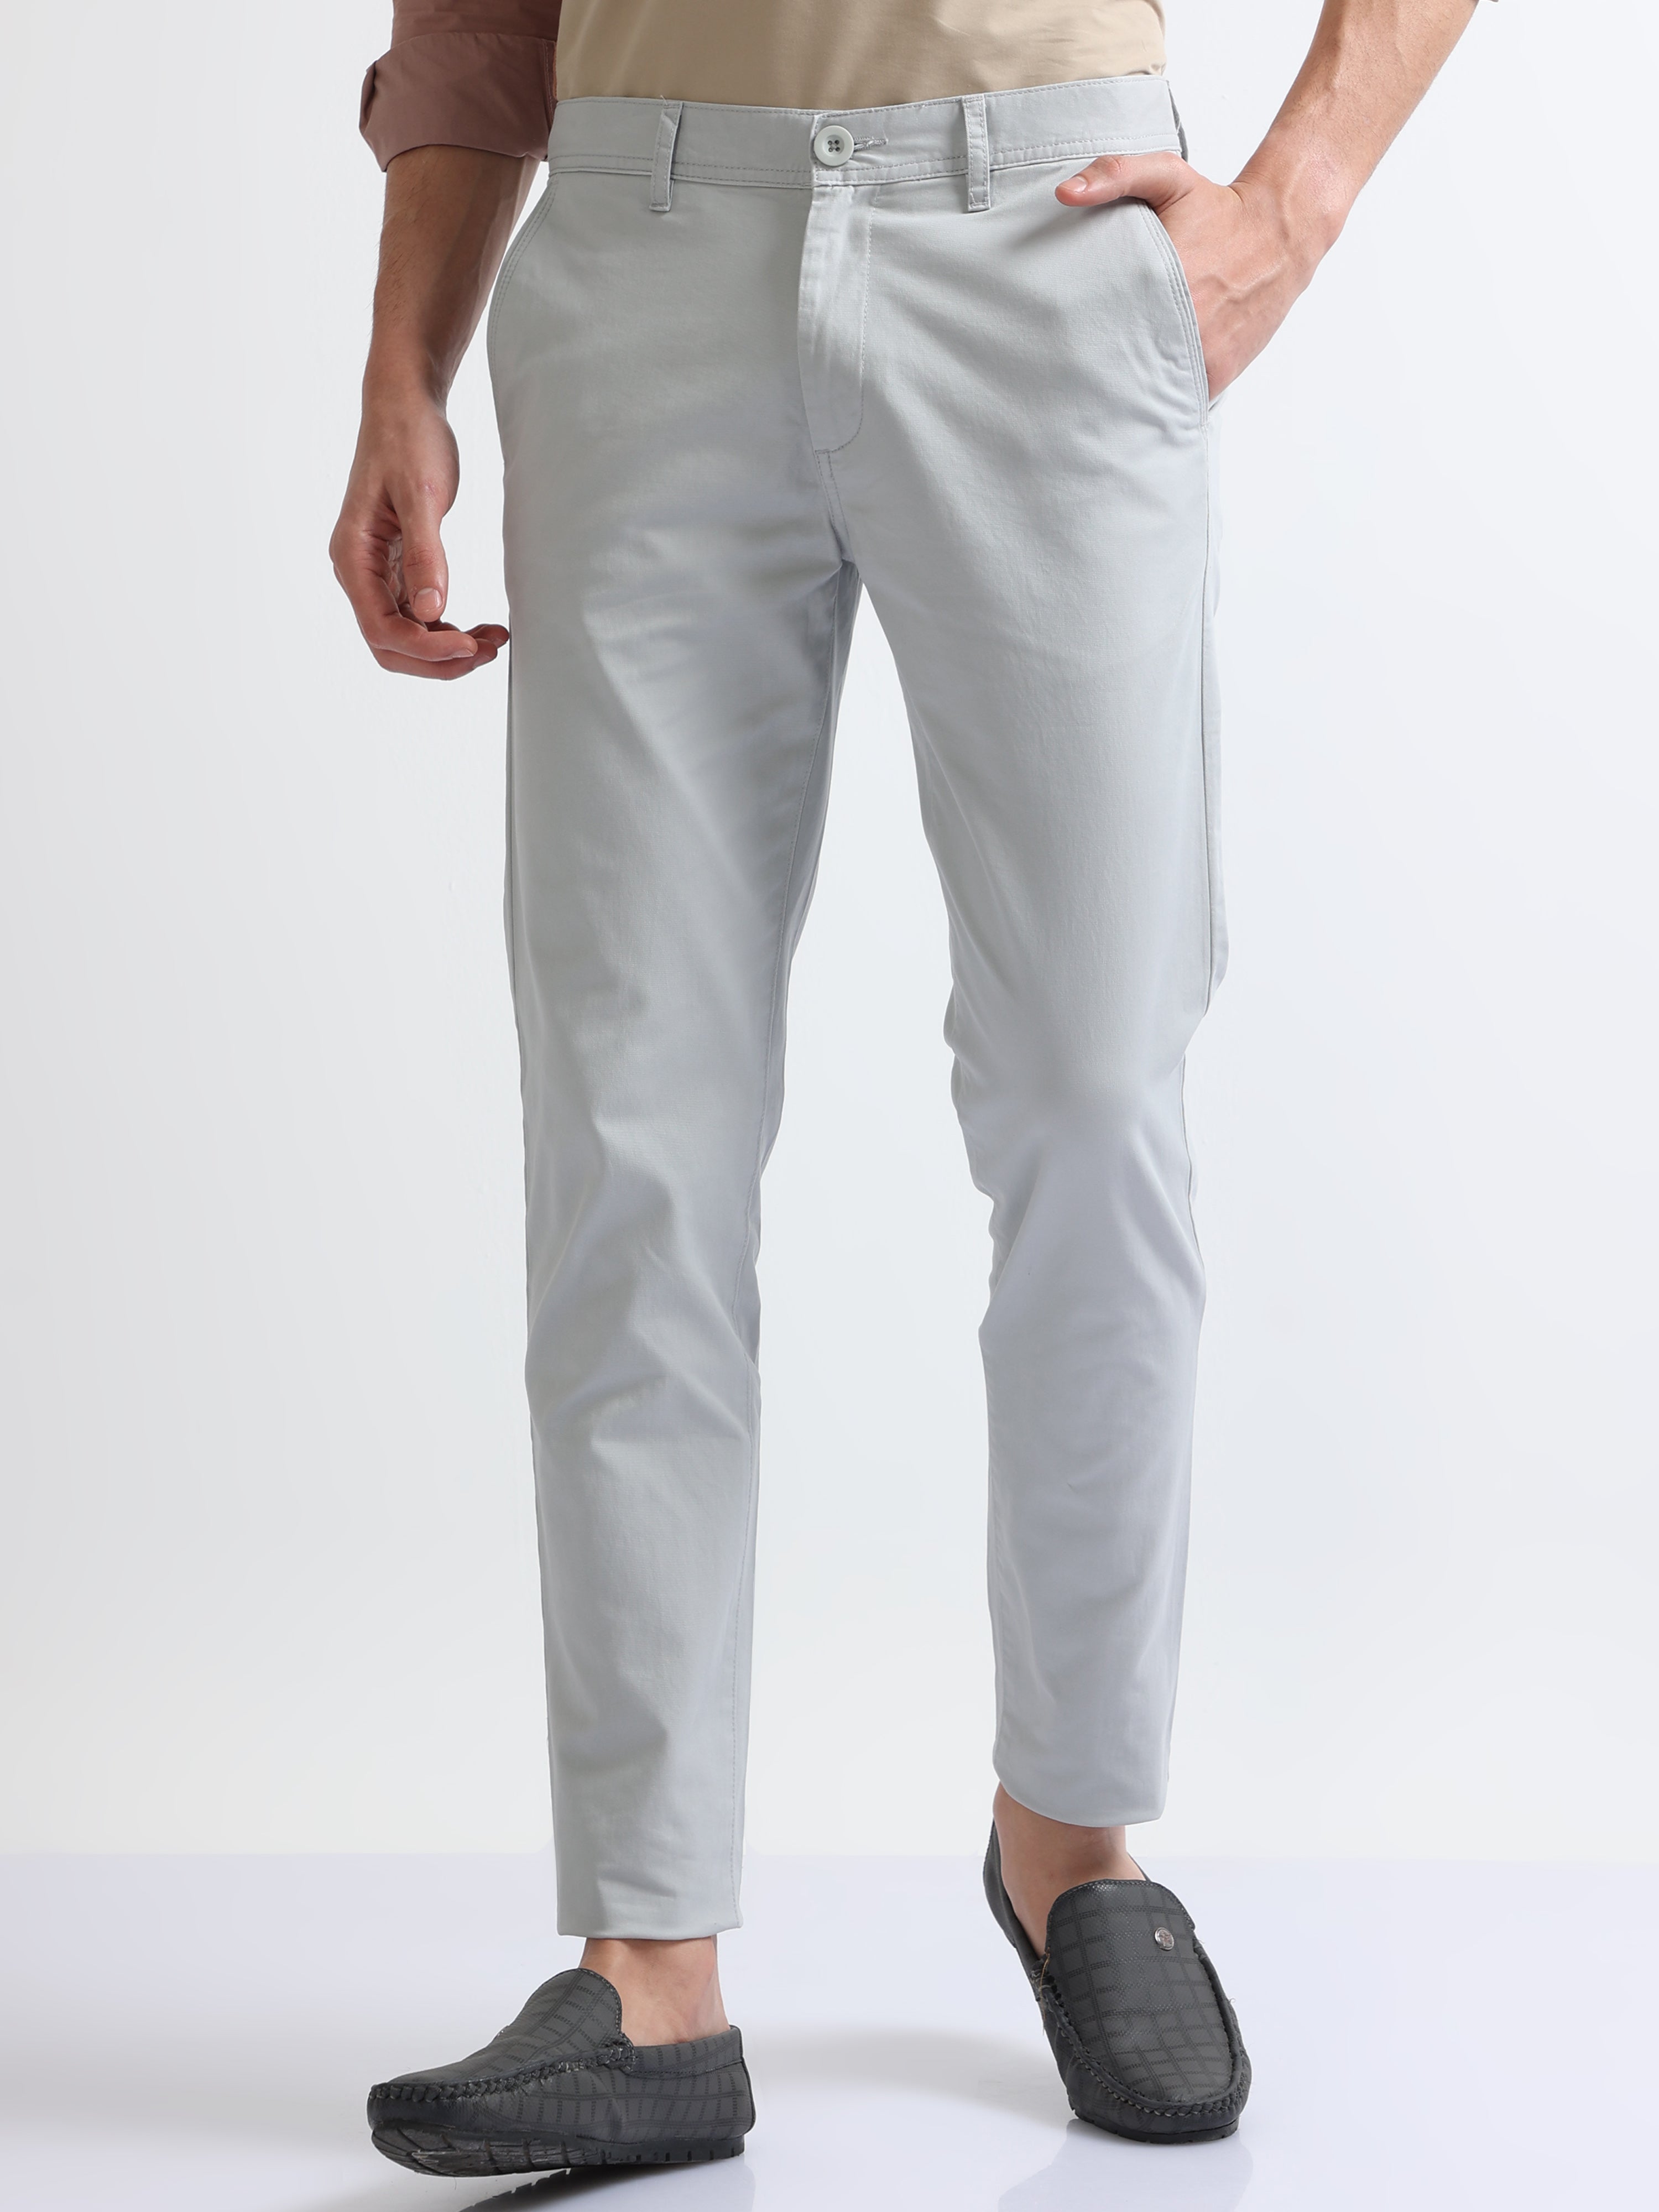 Men's Gray Dress Pants - Men''s Slacks - Express